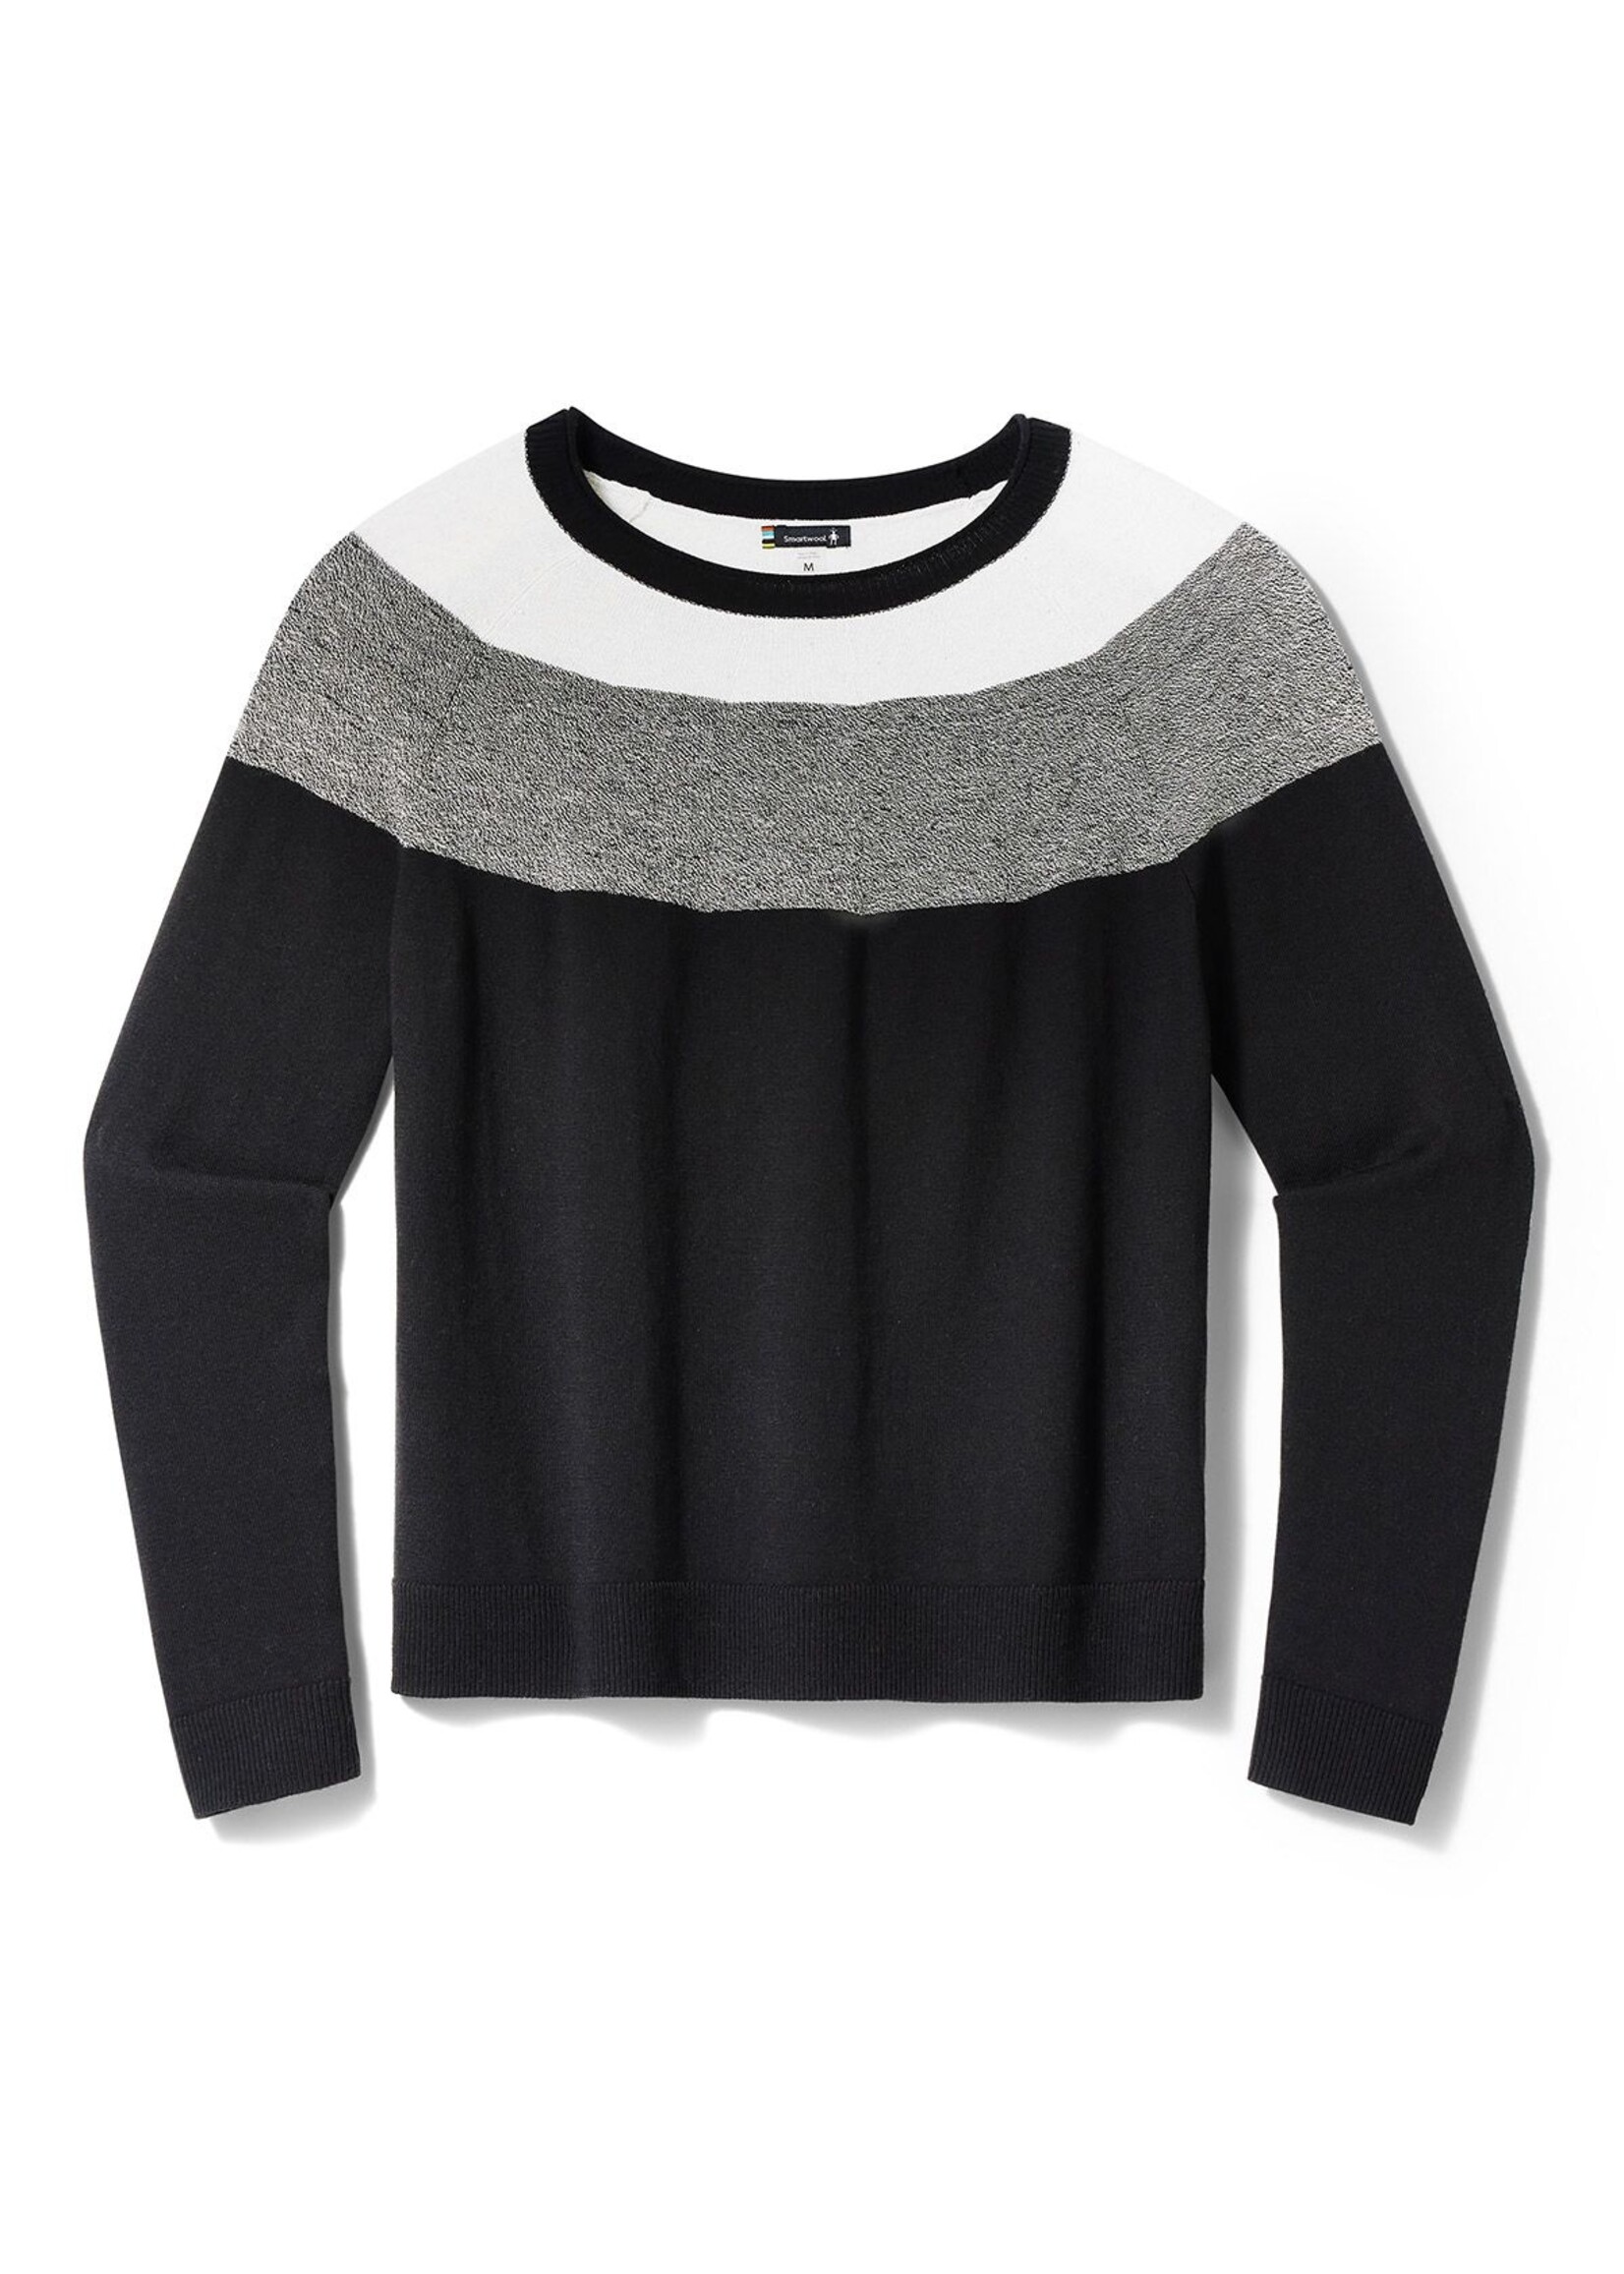 SMARTWOOL Women's Edgewood Colorblock Crew Sweater-Black